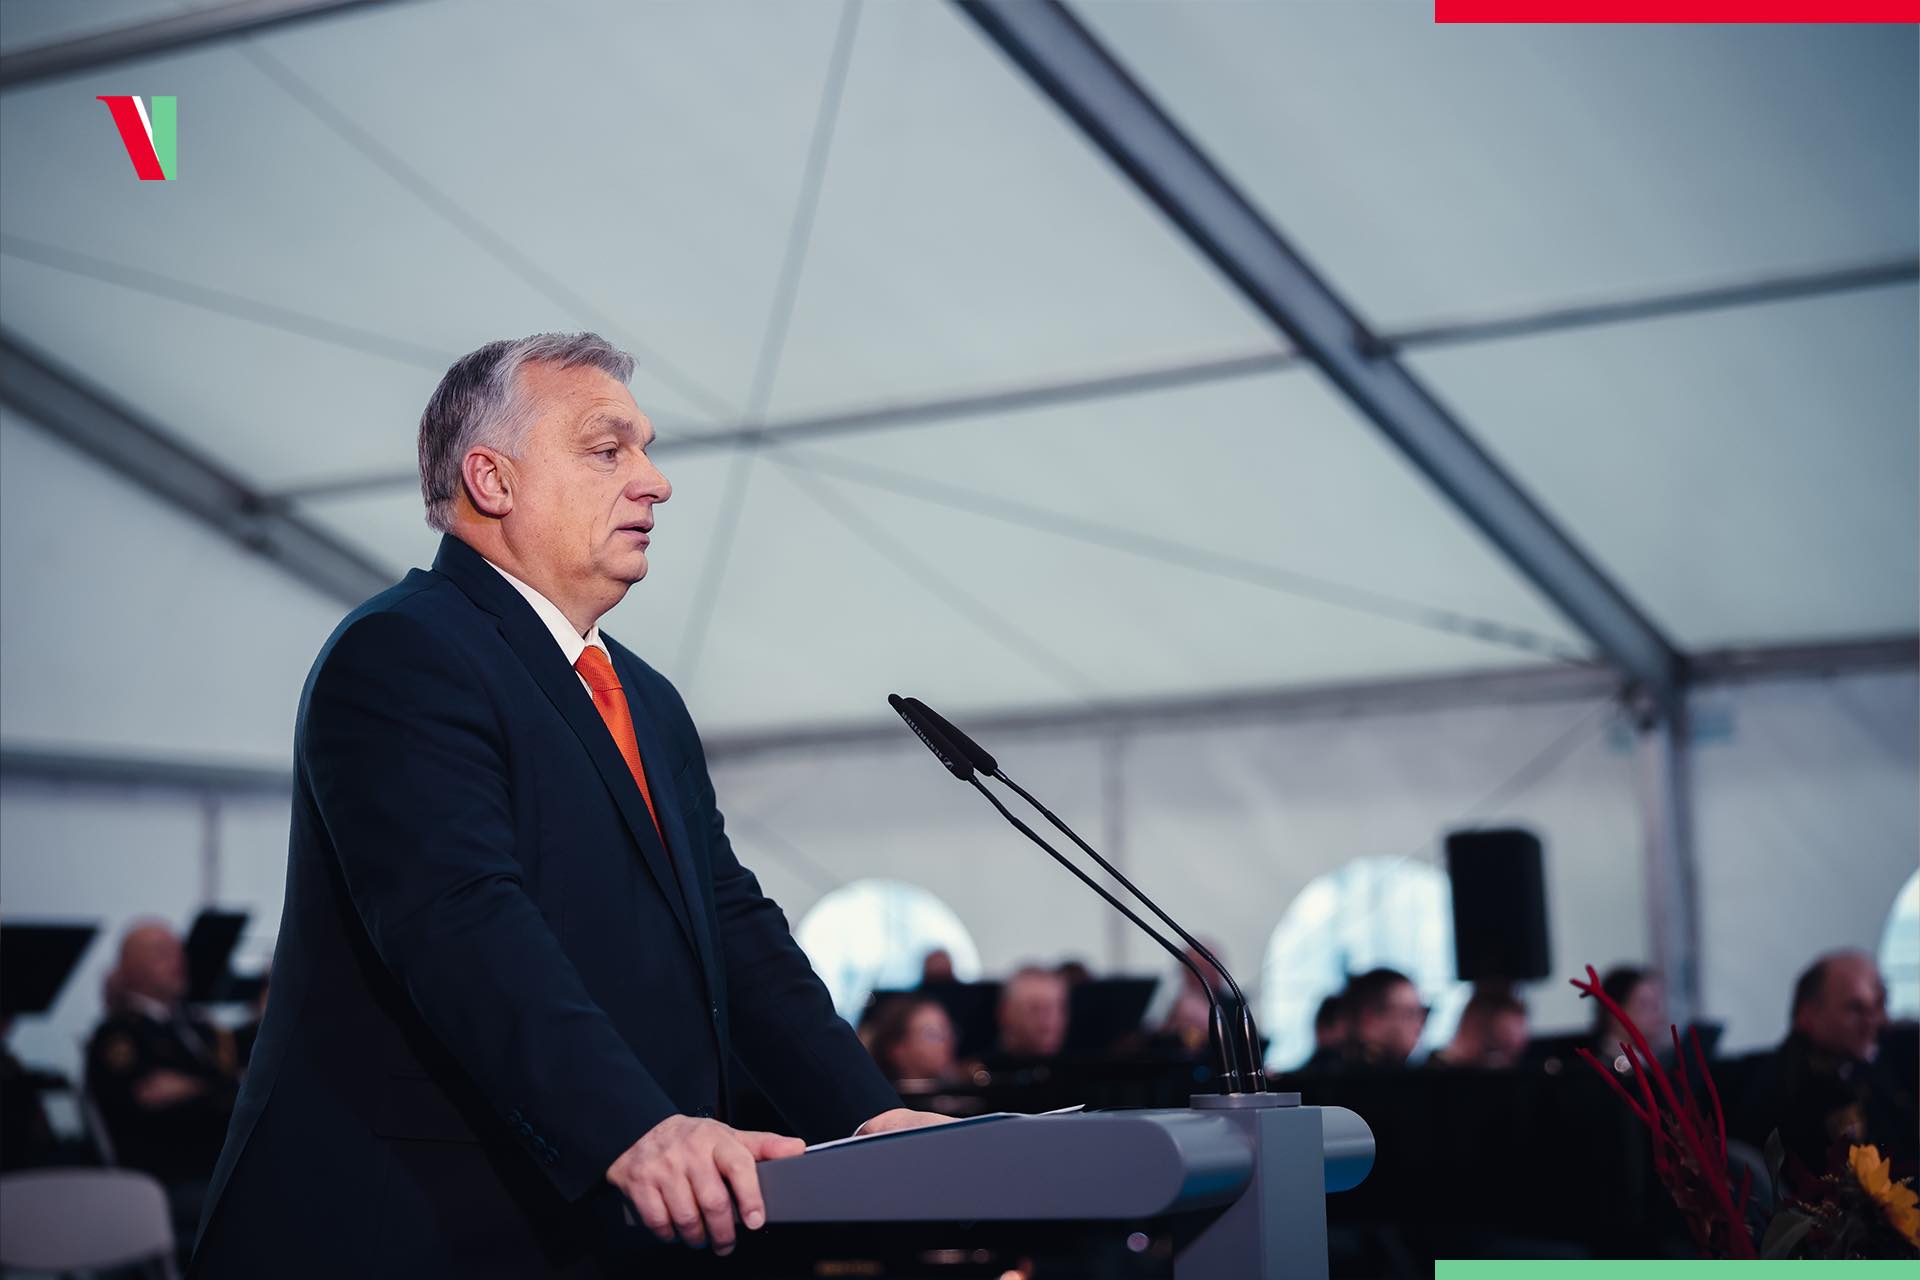 New World War is 'Realistic Threat', Says Orbán